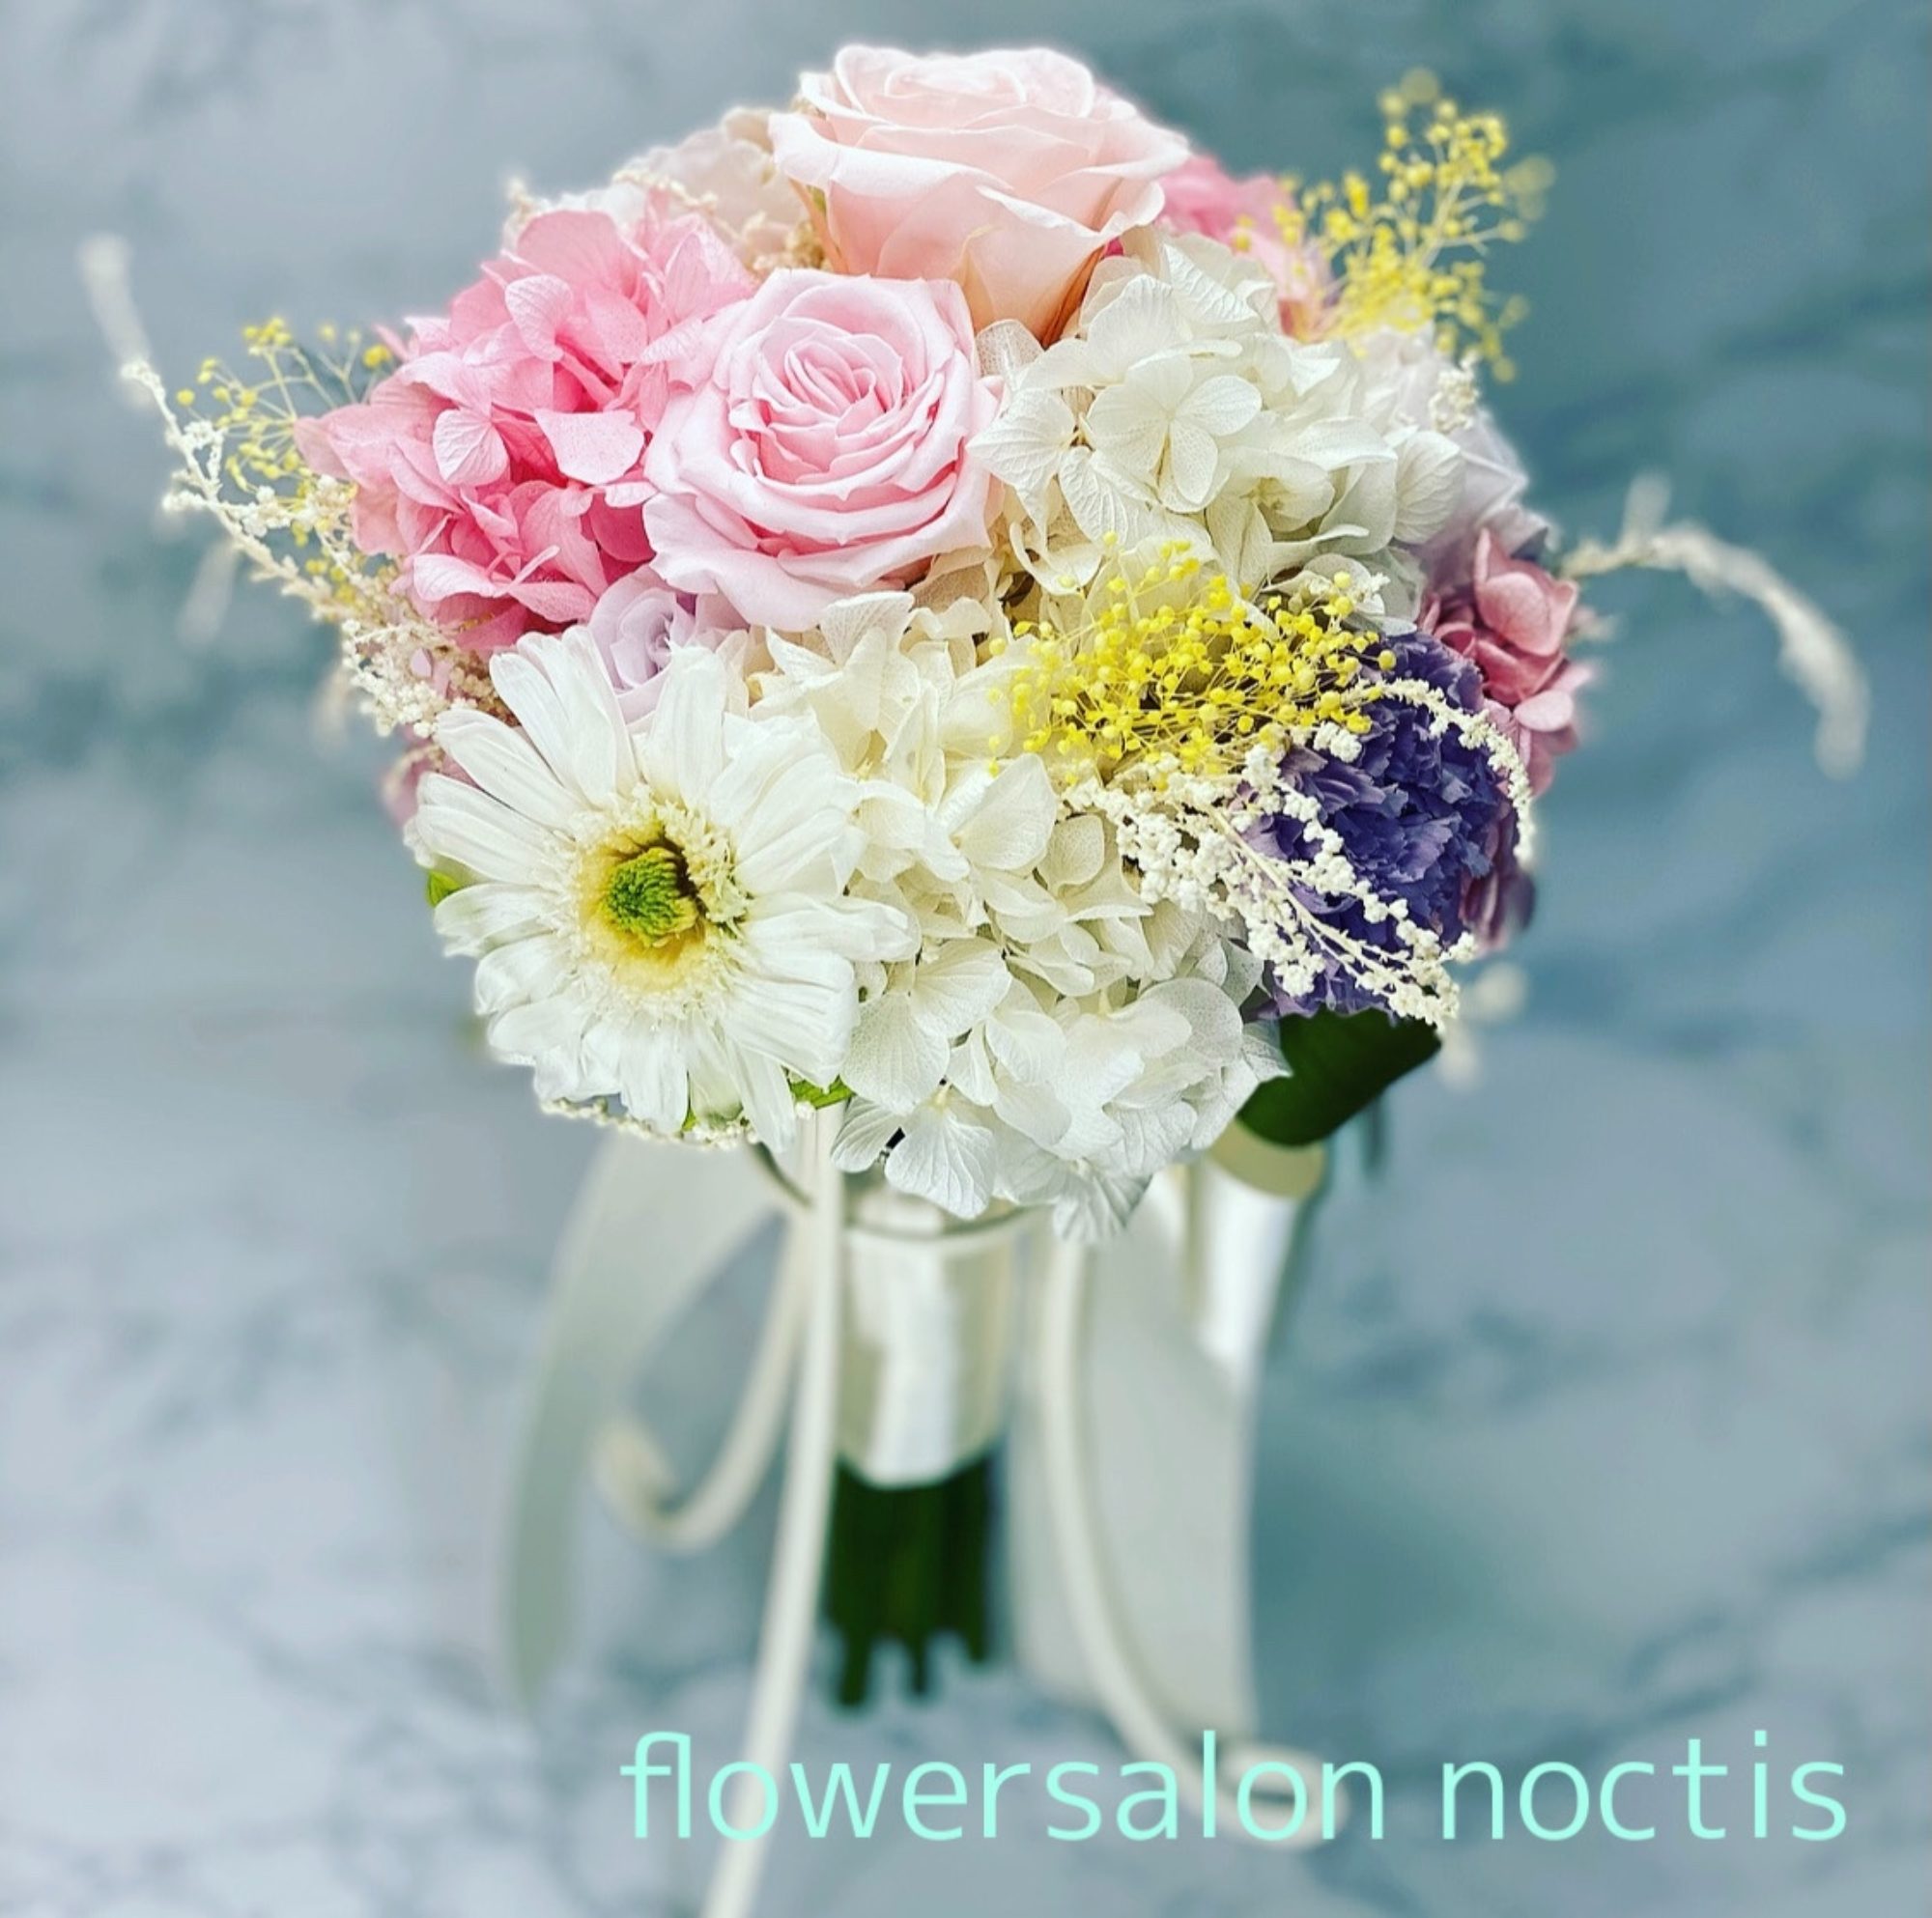 flowersalon noctis